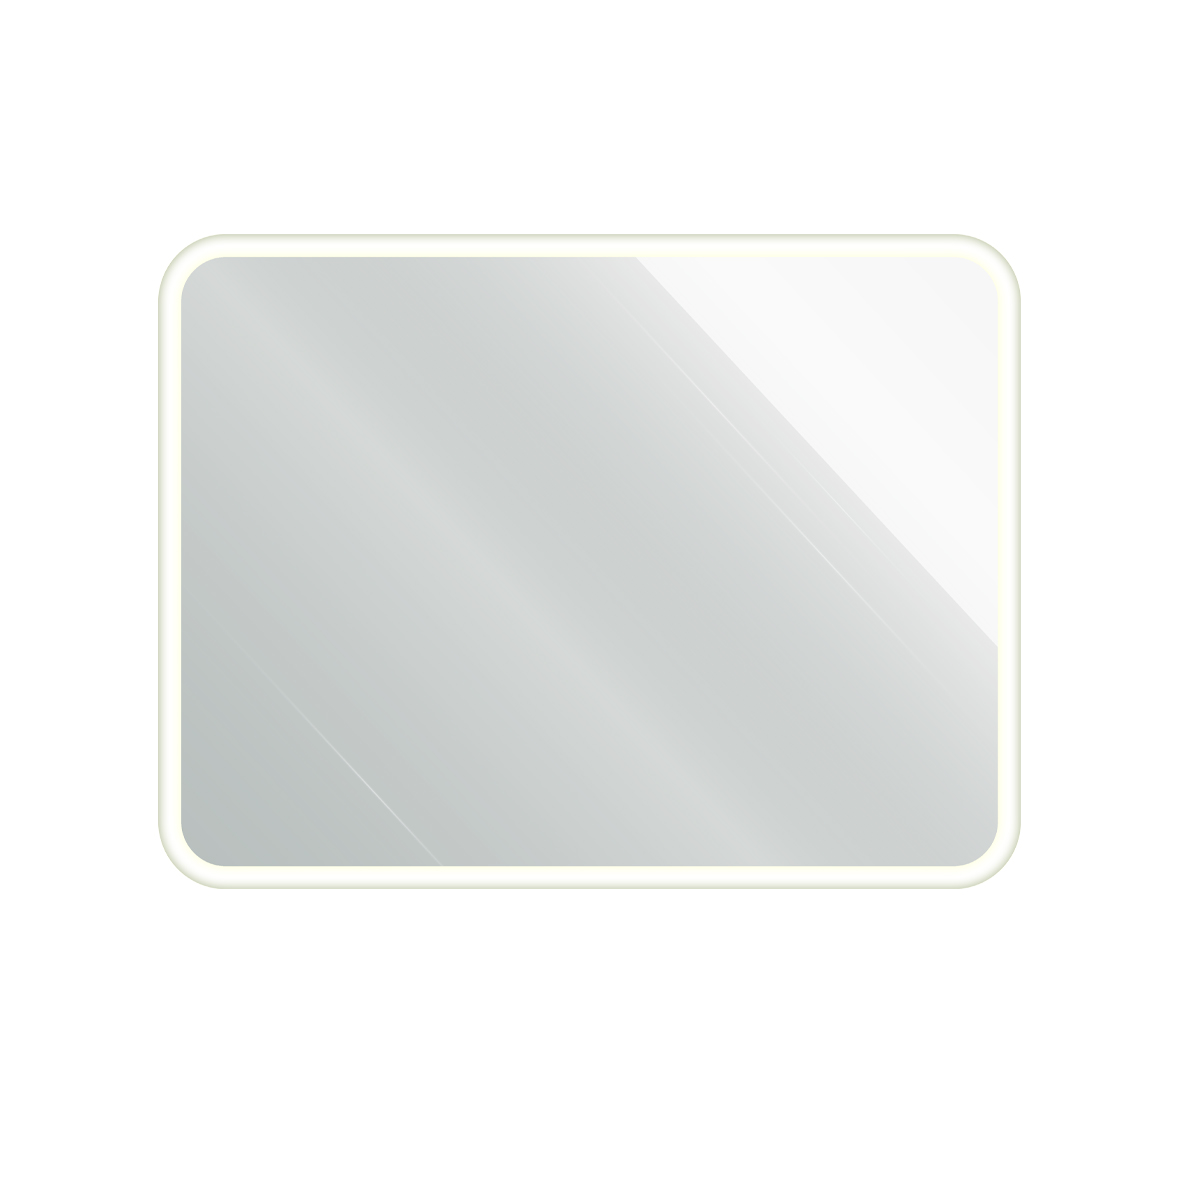 САНАКС - Зеркало 800 х 600 мм, сенсорное, с внутренней LED подсветкой, безрамочное